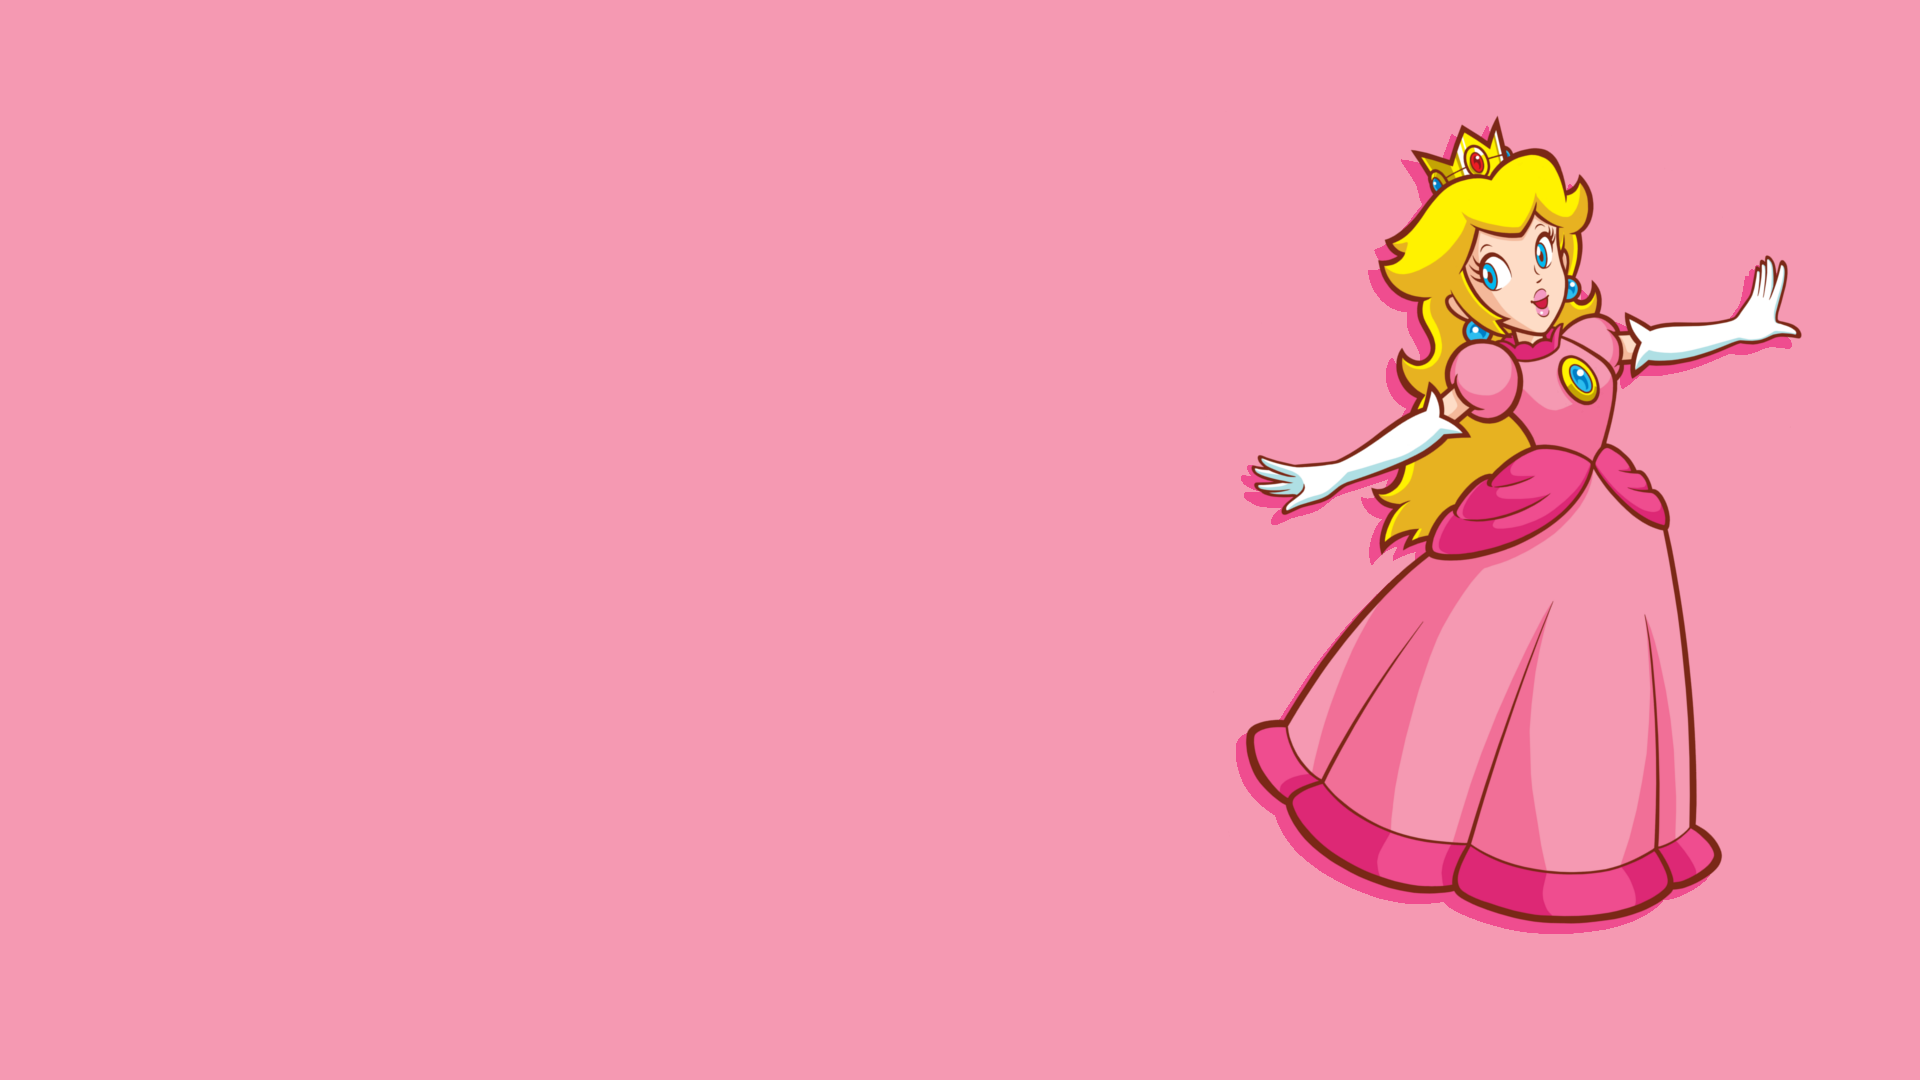 General 1920x1080 Nintendo Super Mario video games minimalism simple background Princess Peach pink background blonde video game girls video game characters